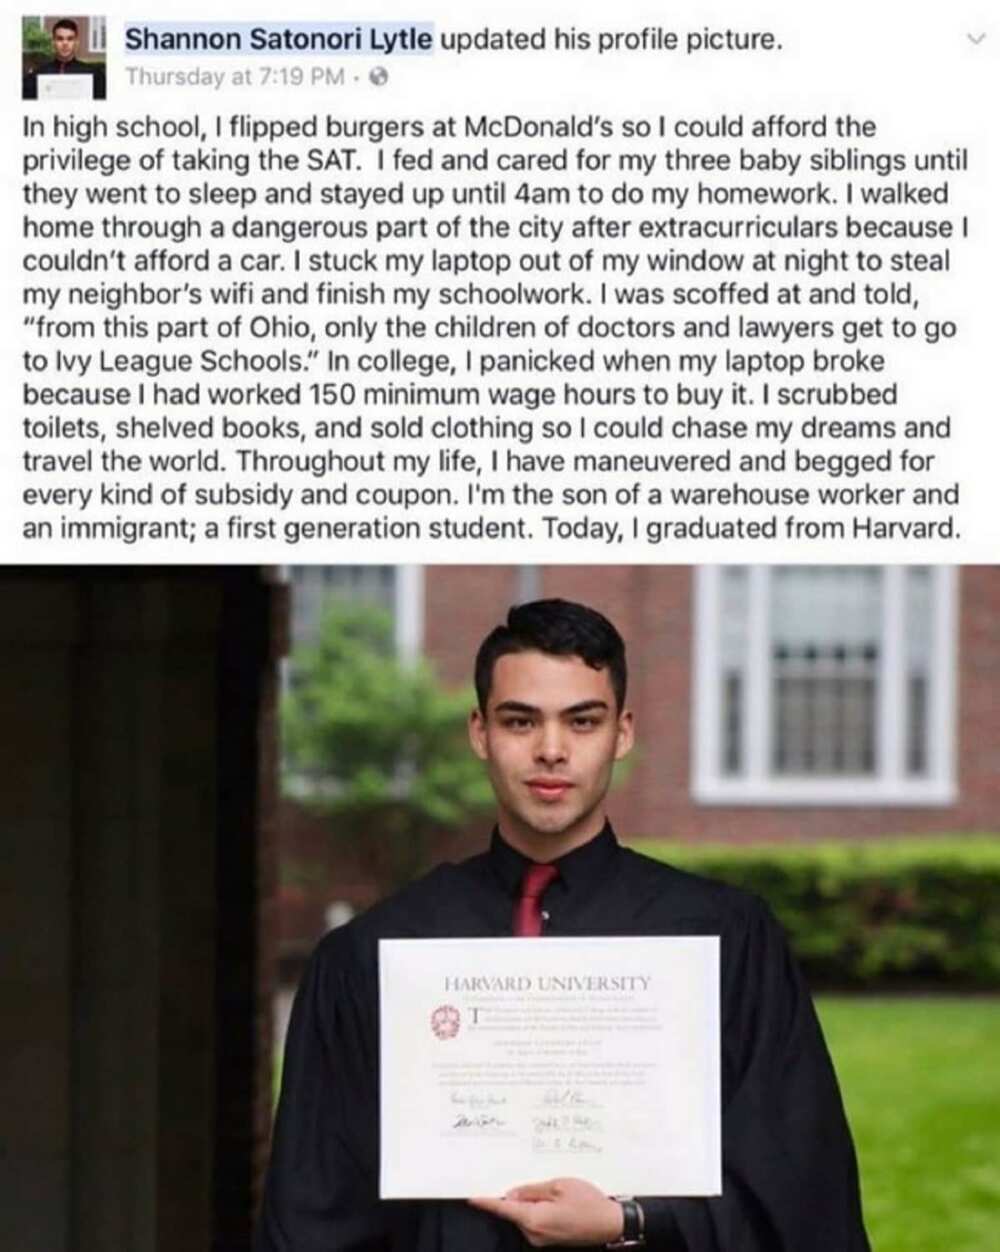 Man went from making burgers at McDonald's to graduating from Harvard